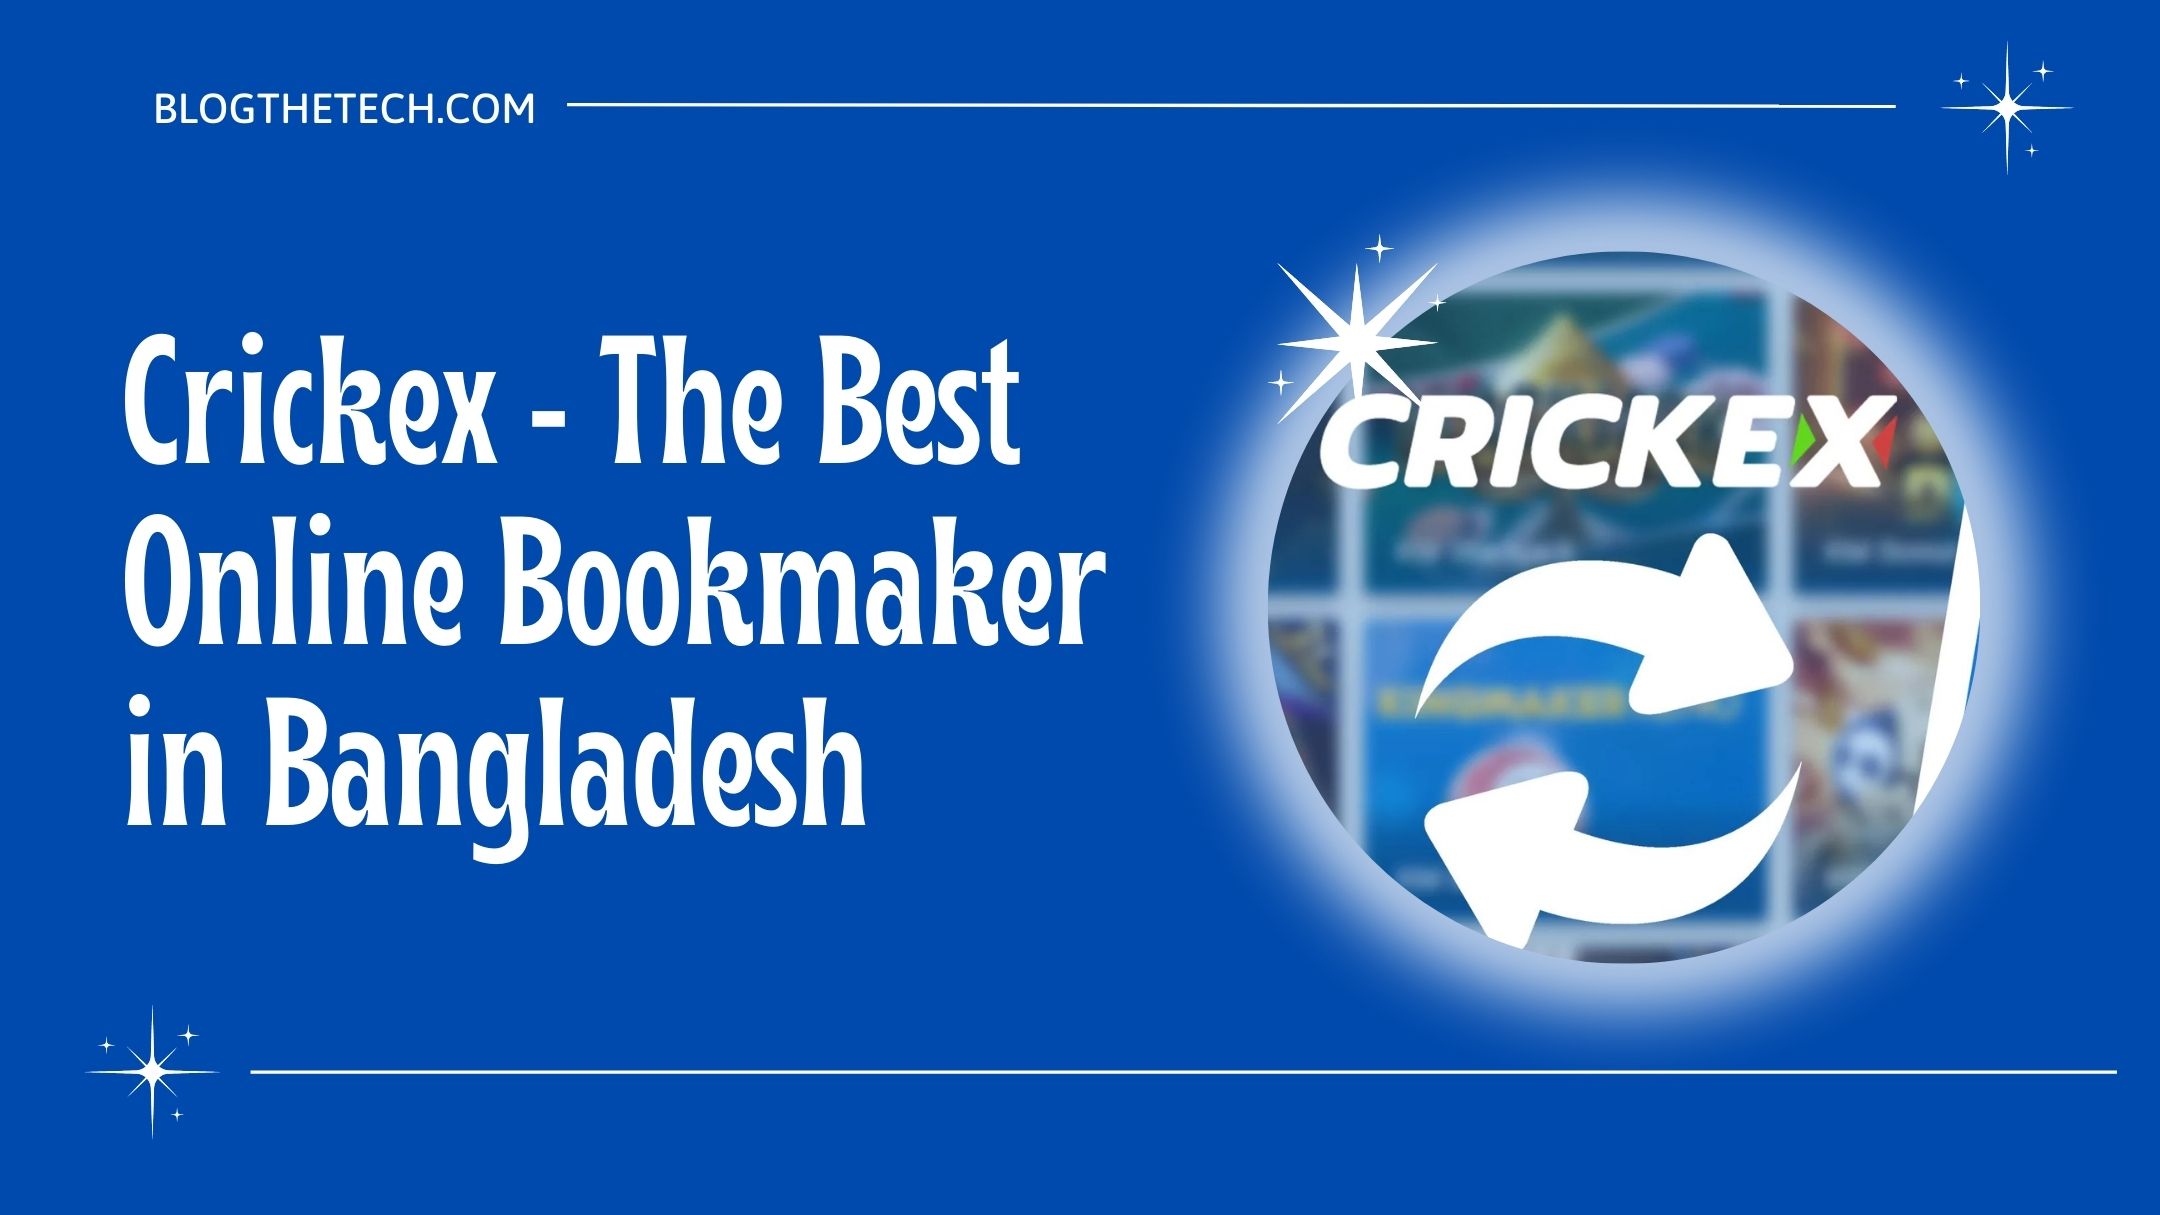 crickex-the-best-online-bookmaker-in-bangladesh-featured